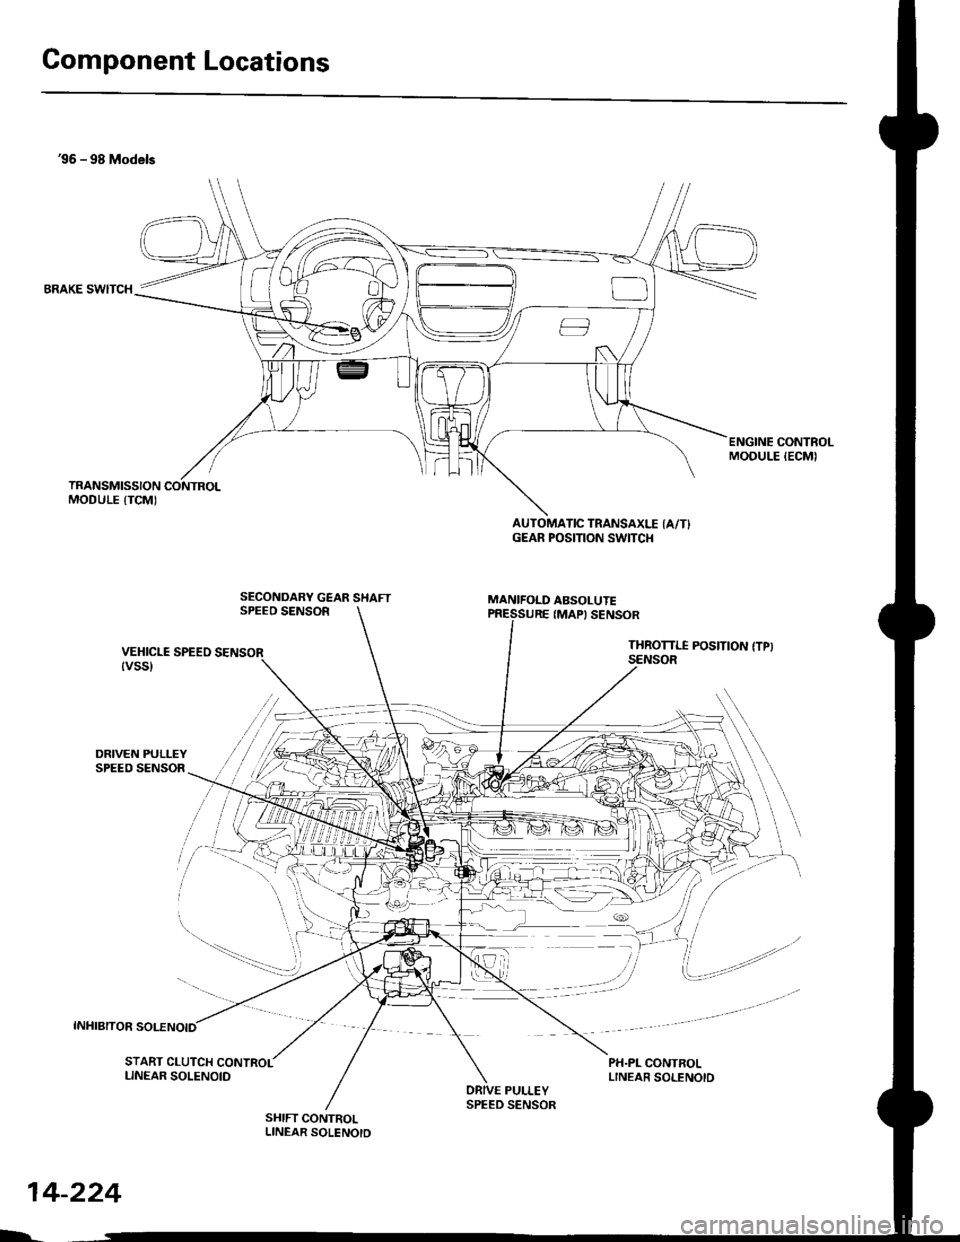 HONDA CIVIC 1996 6.G Workshop Manual Component Locations
36 - 98 Models
BRAKE SWITCH
DRIVEN PULLEYSPEED SENSOR
INHIBITOR SOLENOID
ENGINE CONTROLMODULE IECMI
SECONDARY GEAR SHAFTSPEEO SENSOR
AUTOMATIC TRANSAXLE (A/T}GEAR POSITION SWITCI{
